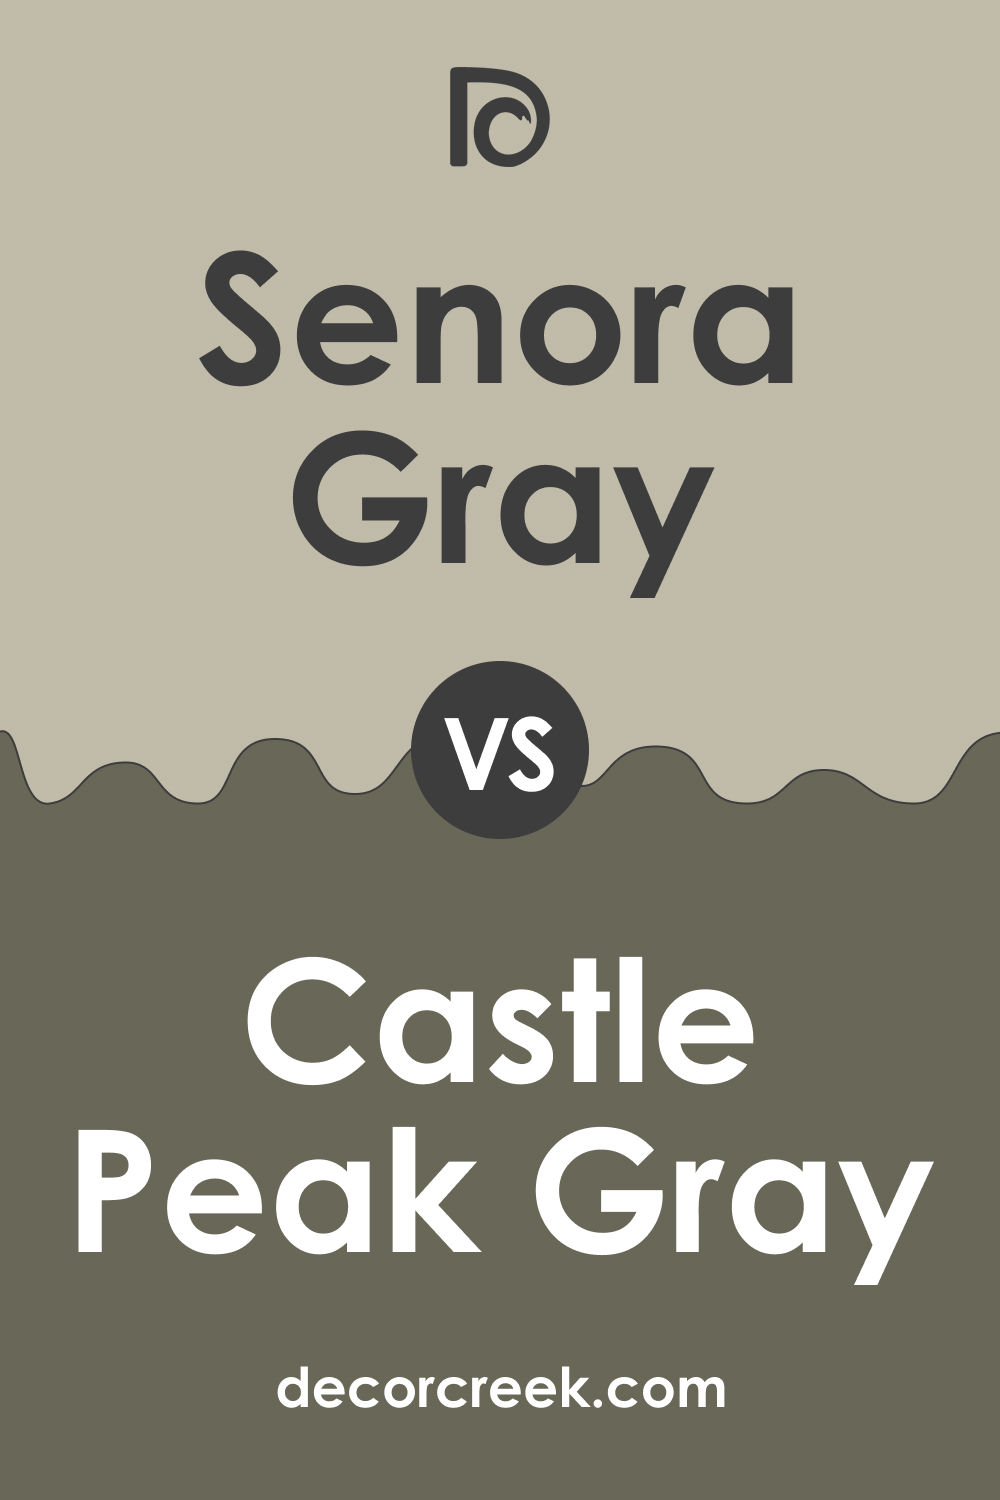 Senora Gray 1530 vs. BM 1561 Castle Peak Gray